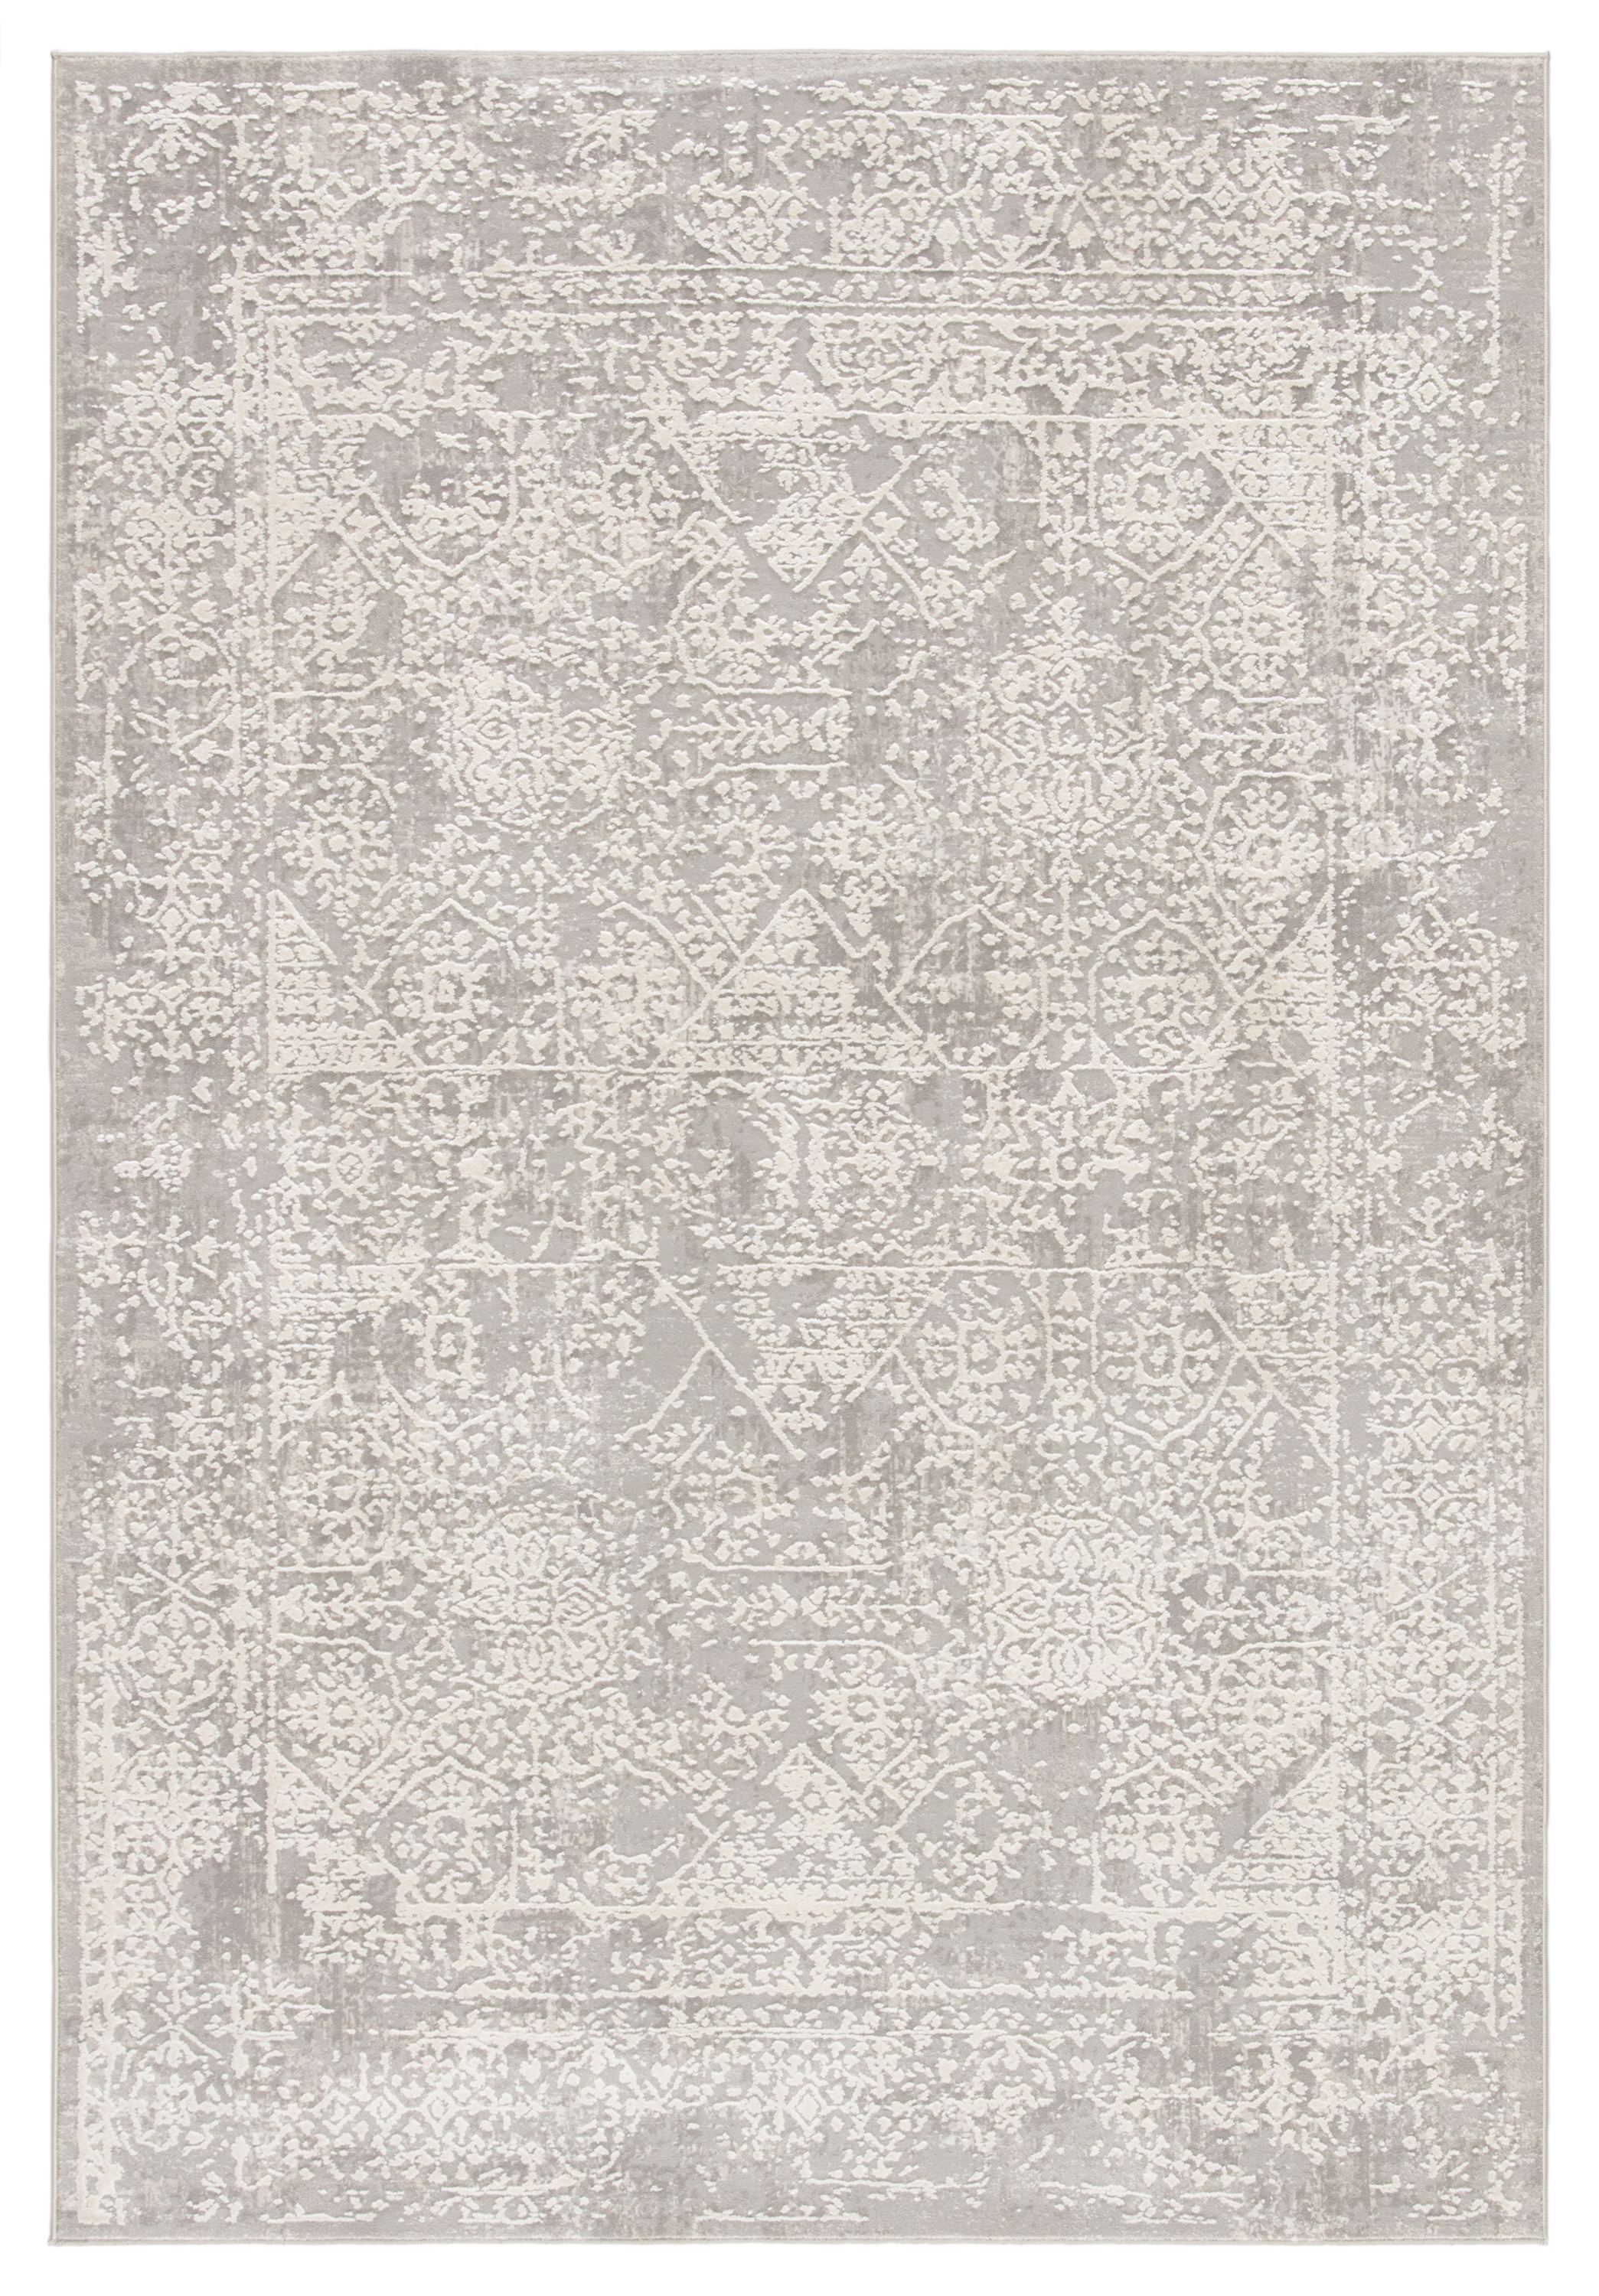 Lianna Abstract Gray/ White Area Rug (12'X15') - Image 0